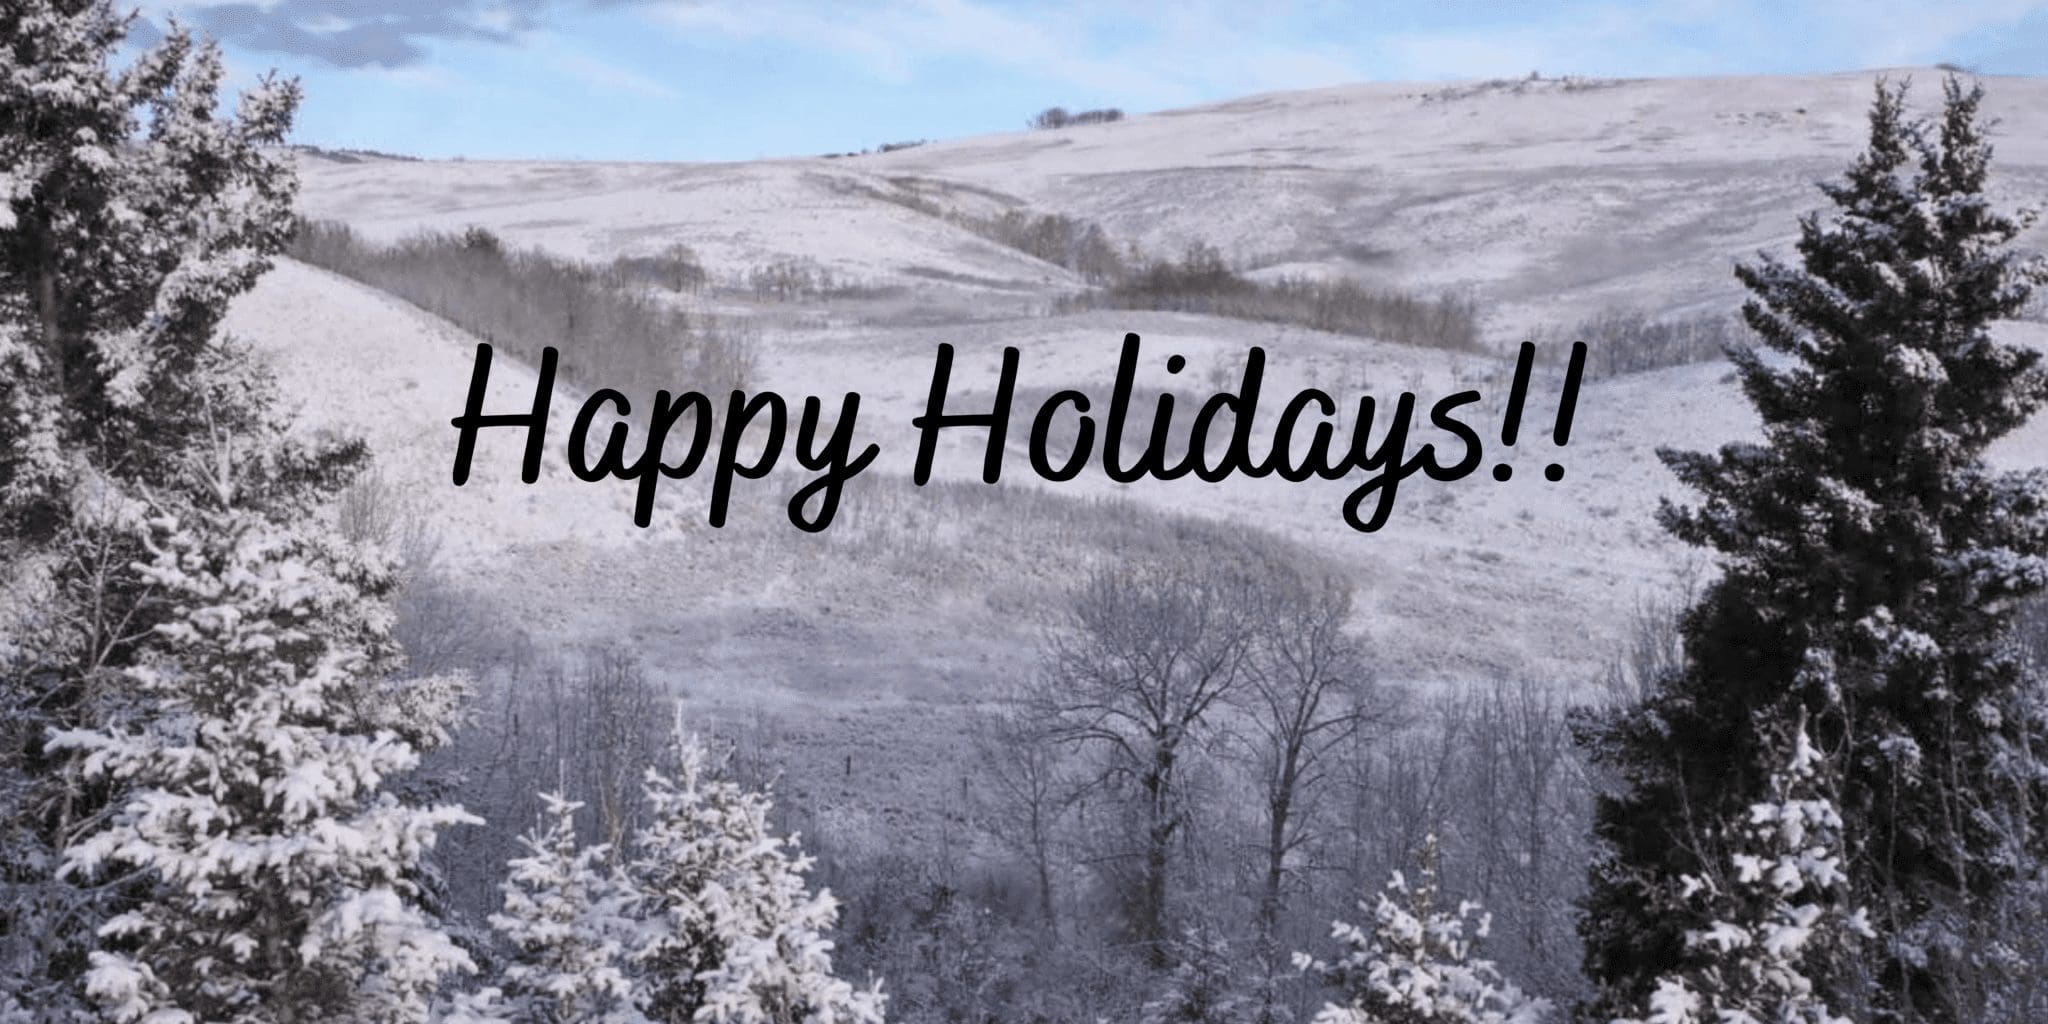 December Newsletter. Happy Holidays